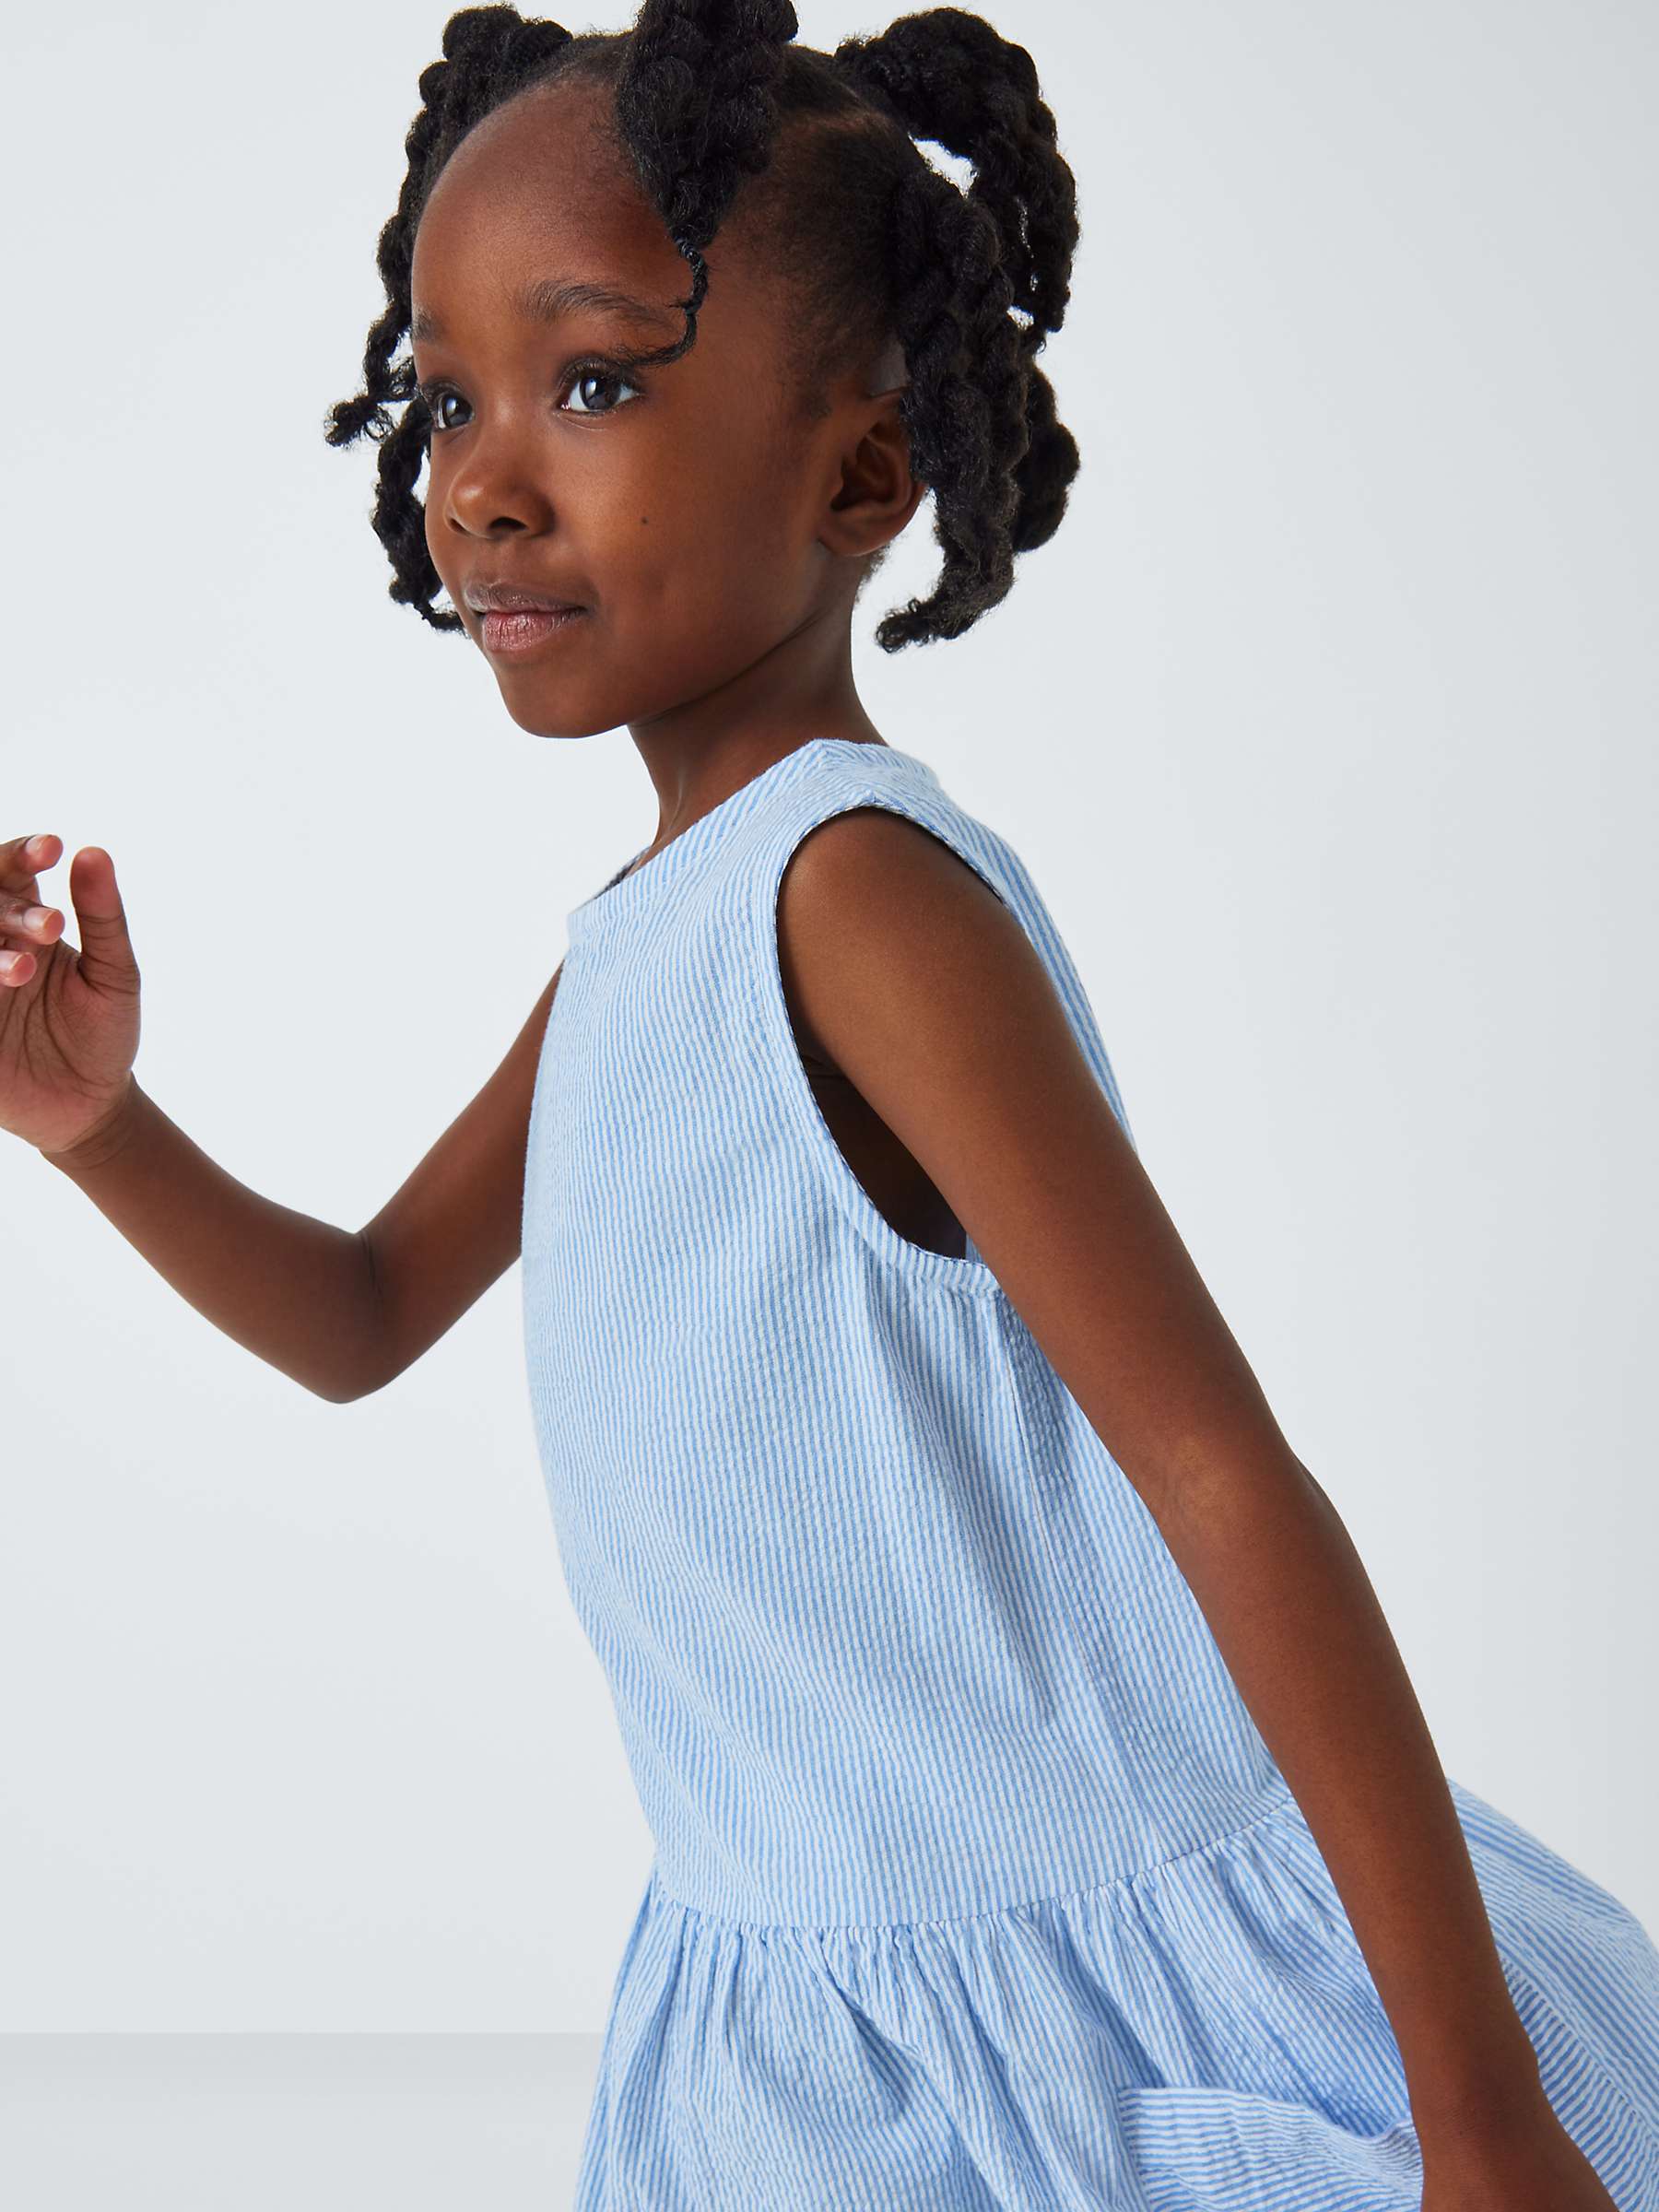 Buy John Lewis Kids' Stripe Woven Dress, Blue Online at johnlewis.com